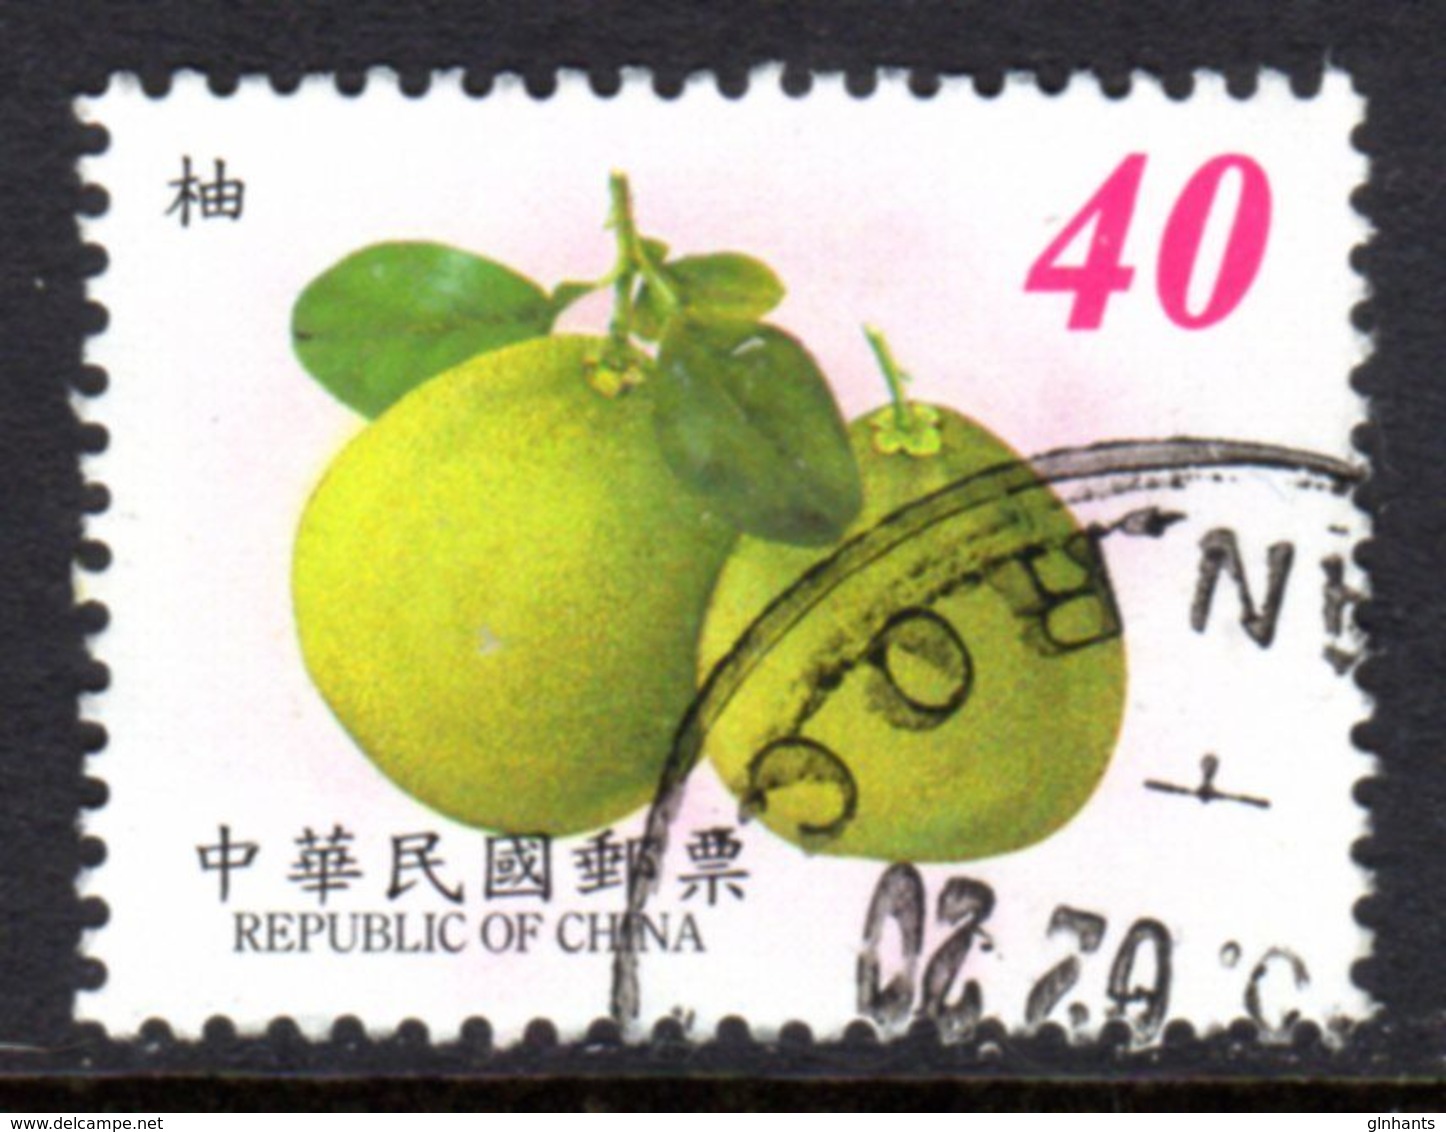 TAIWAN ROC - 2001 FRUITS 2nd SERIES $40 GRAPEFRUIT STAMP FINE USED SG 2735 - Usati